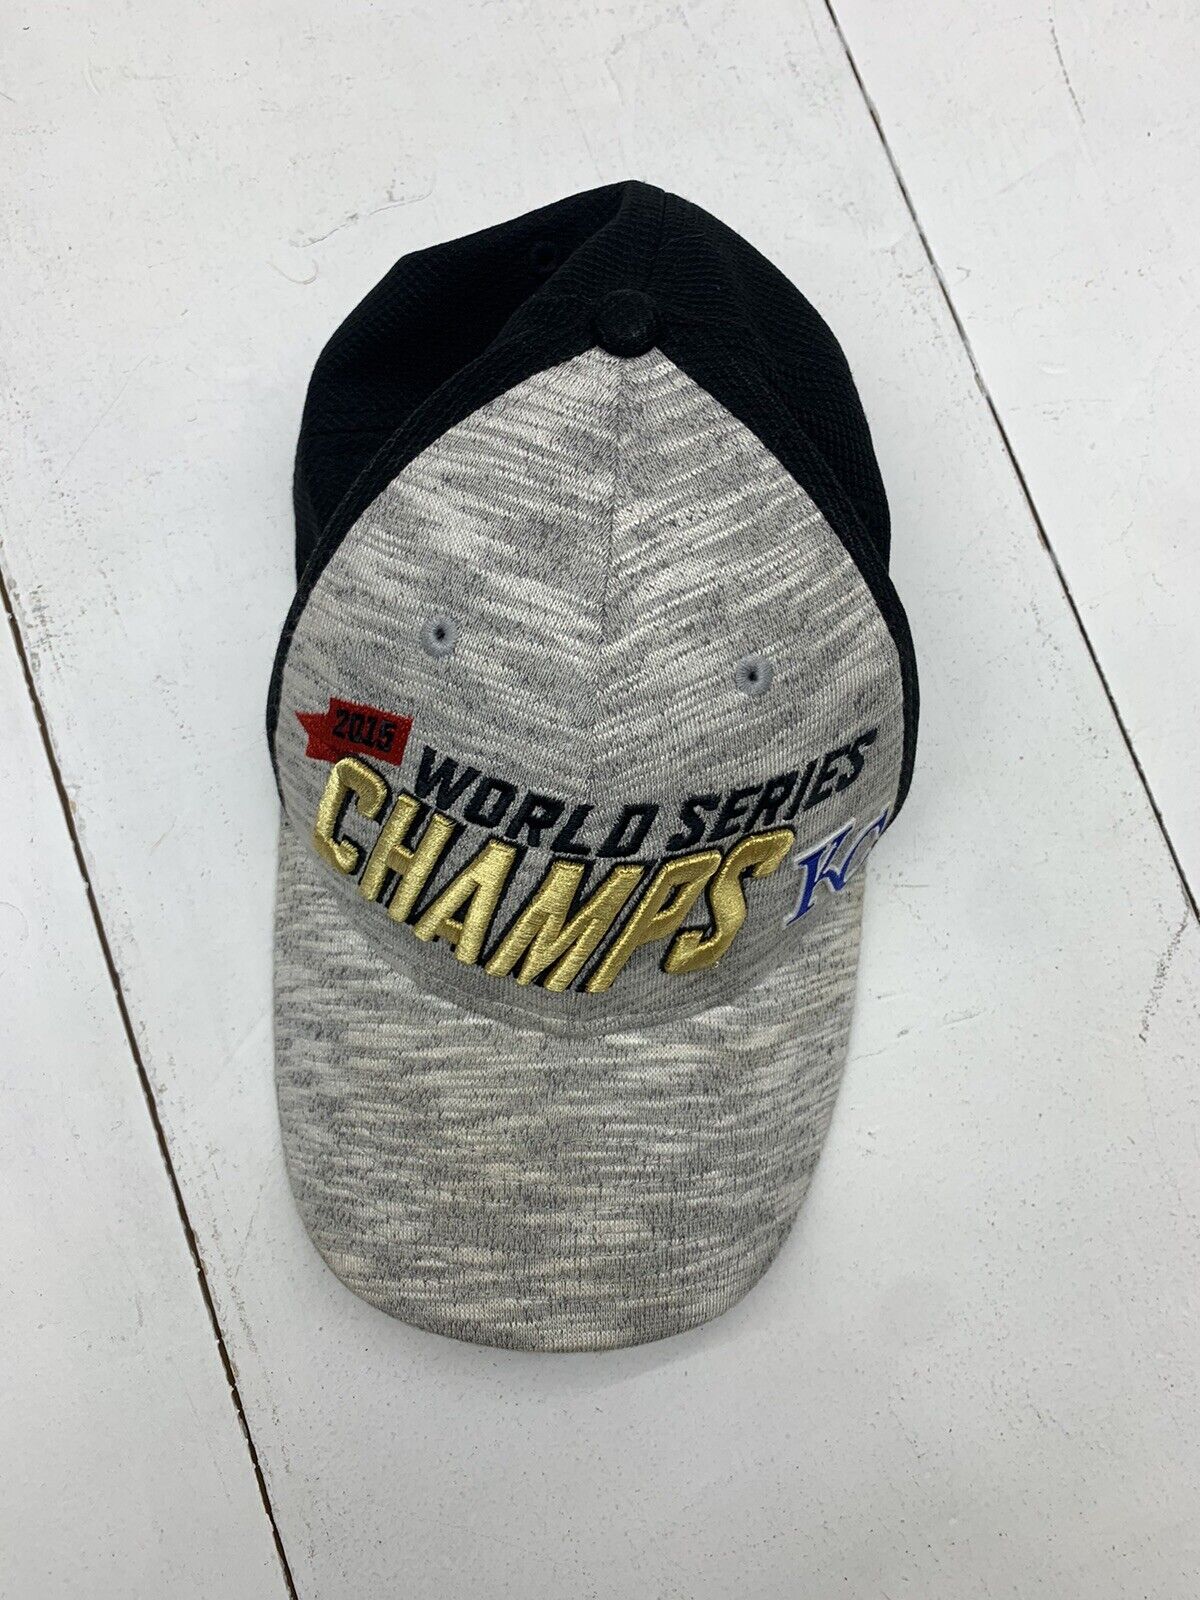 Mens Royals Hat, Mens Kansas City Royals Hats, Baseball Caps